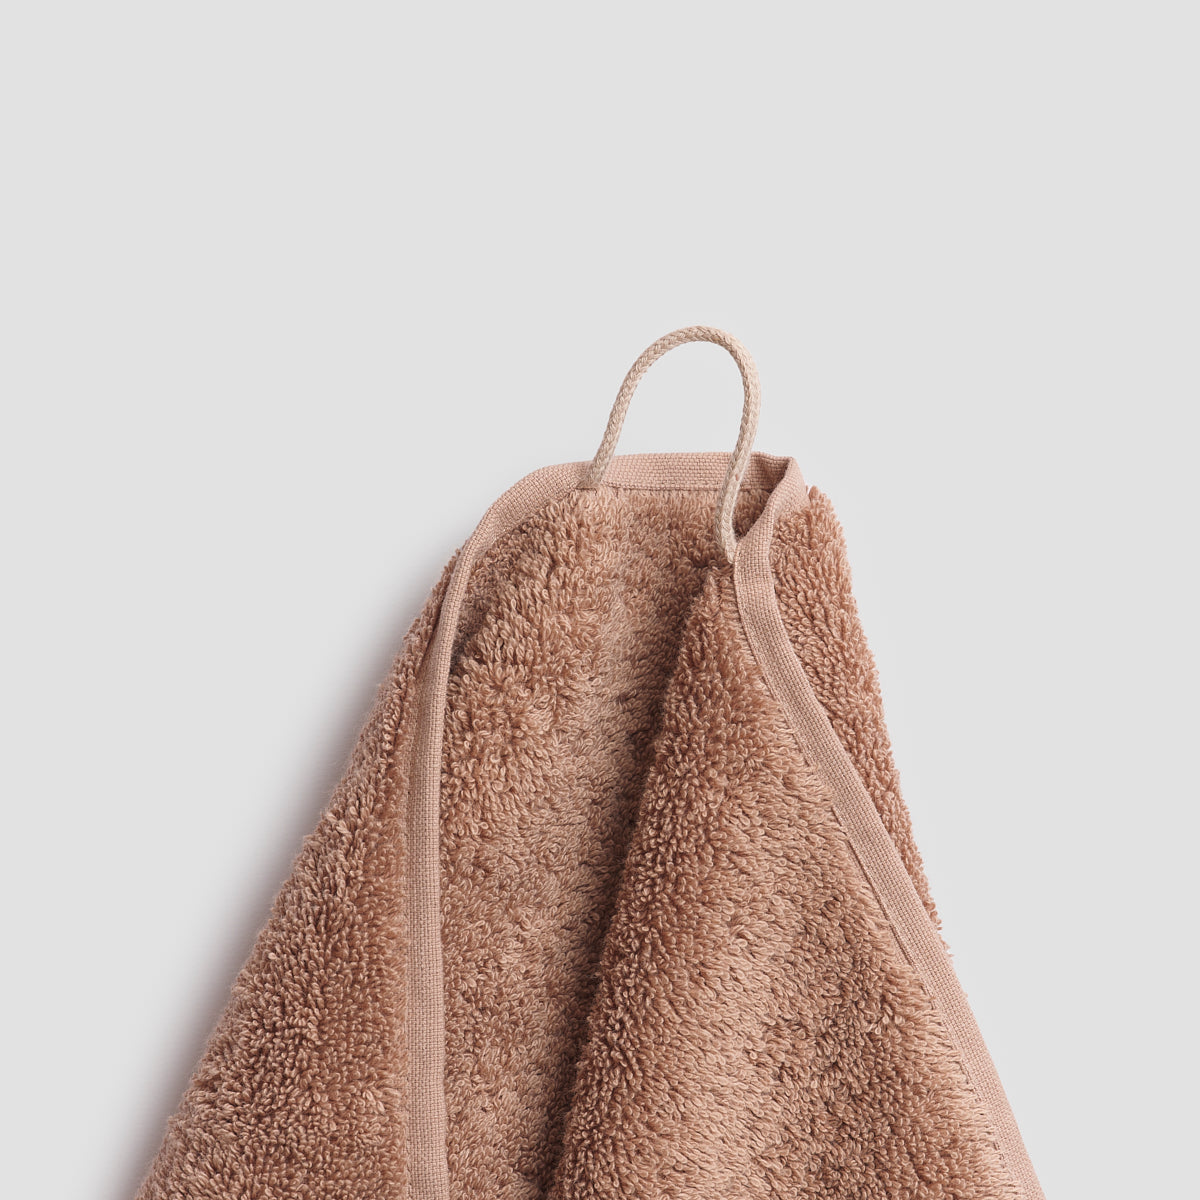 Mushroom Organic Cotton Bath Towel featuring loop for easy hanging